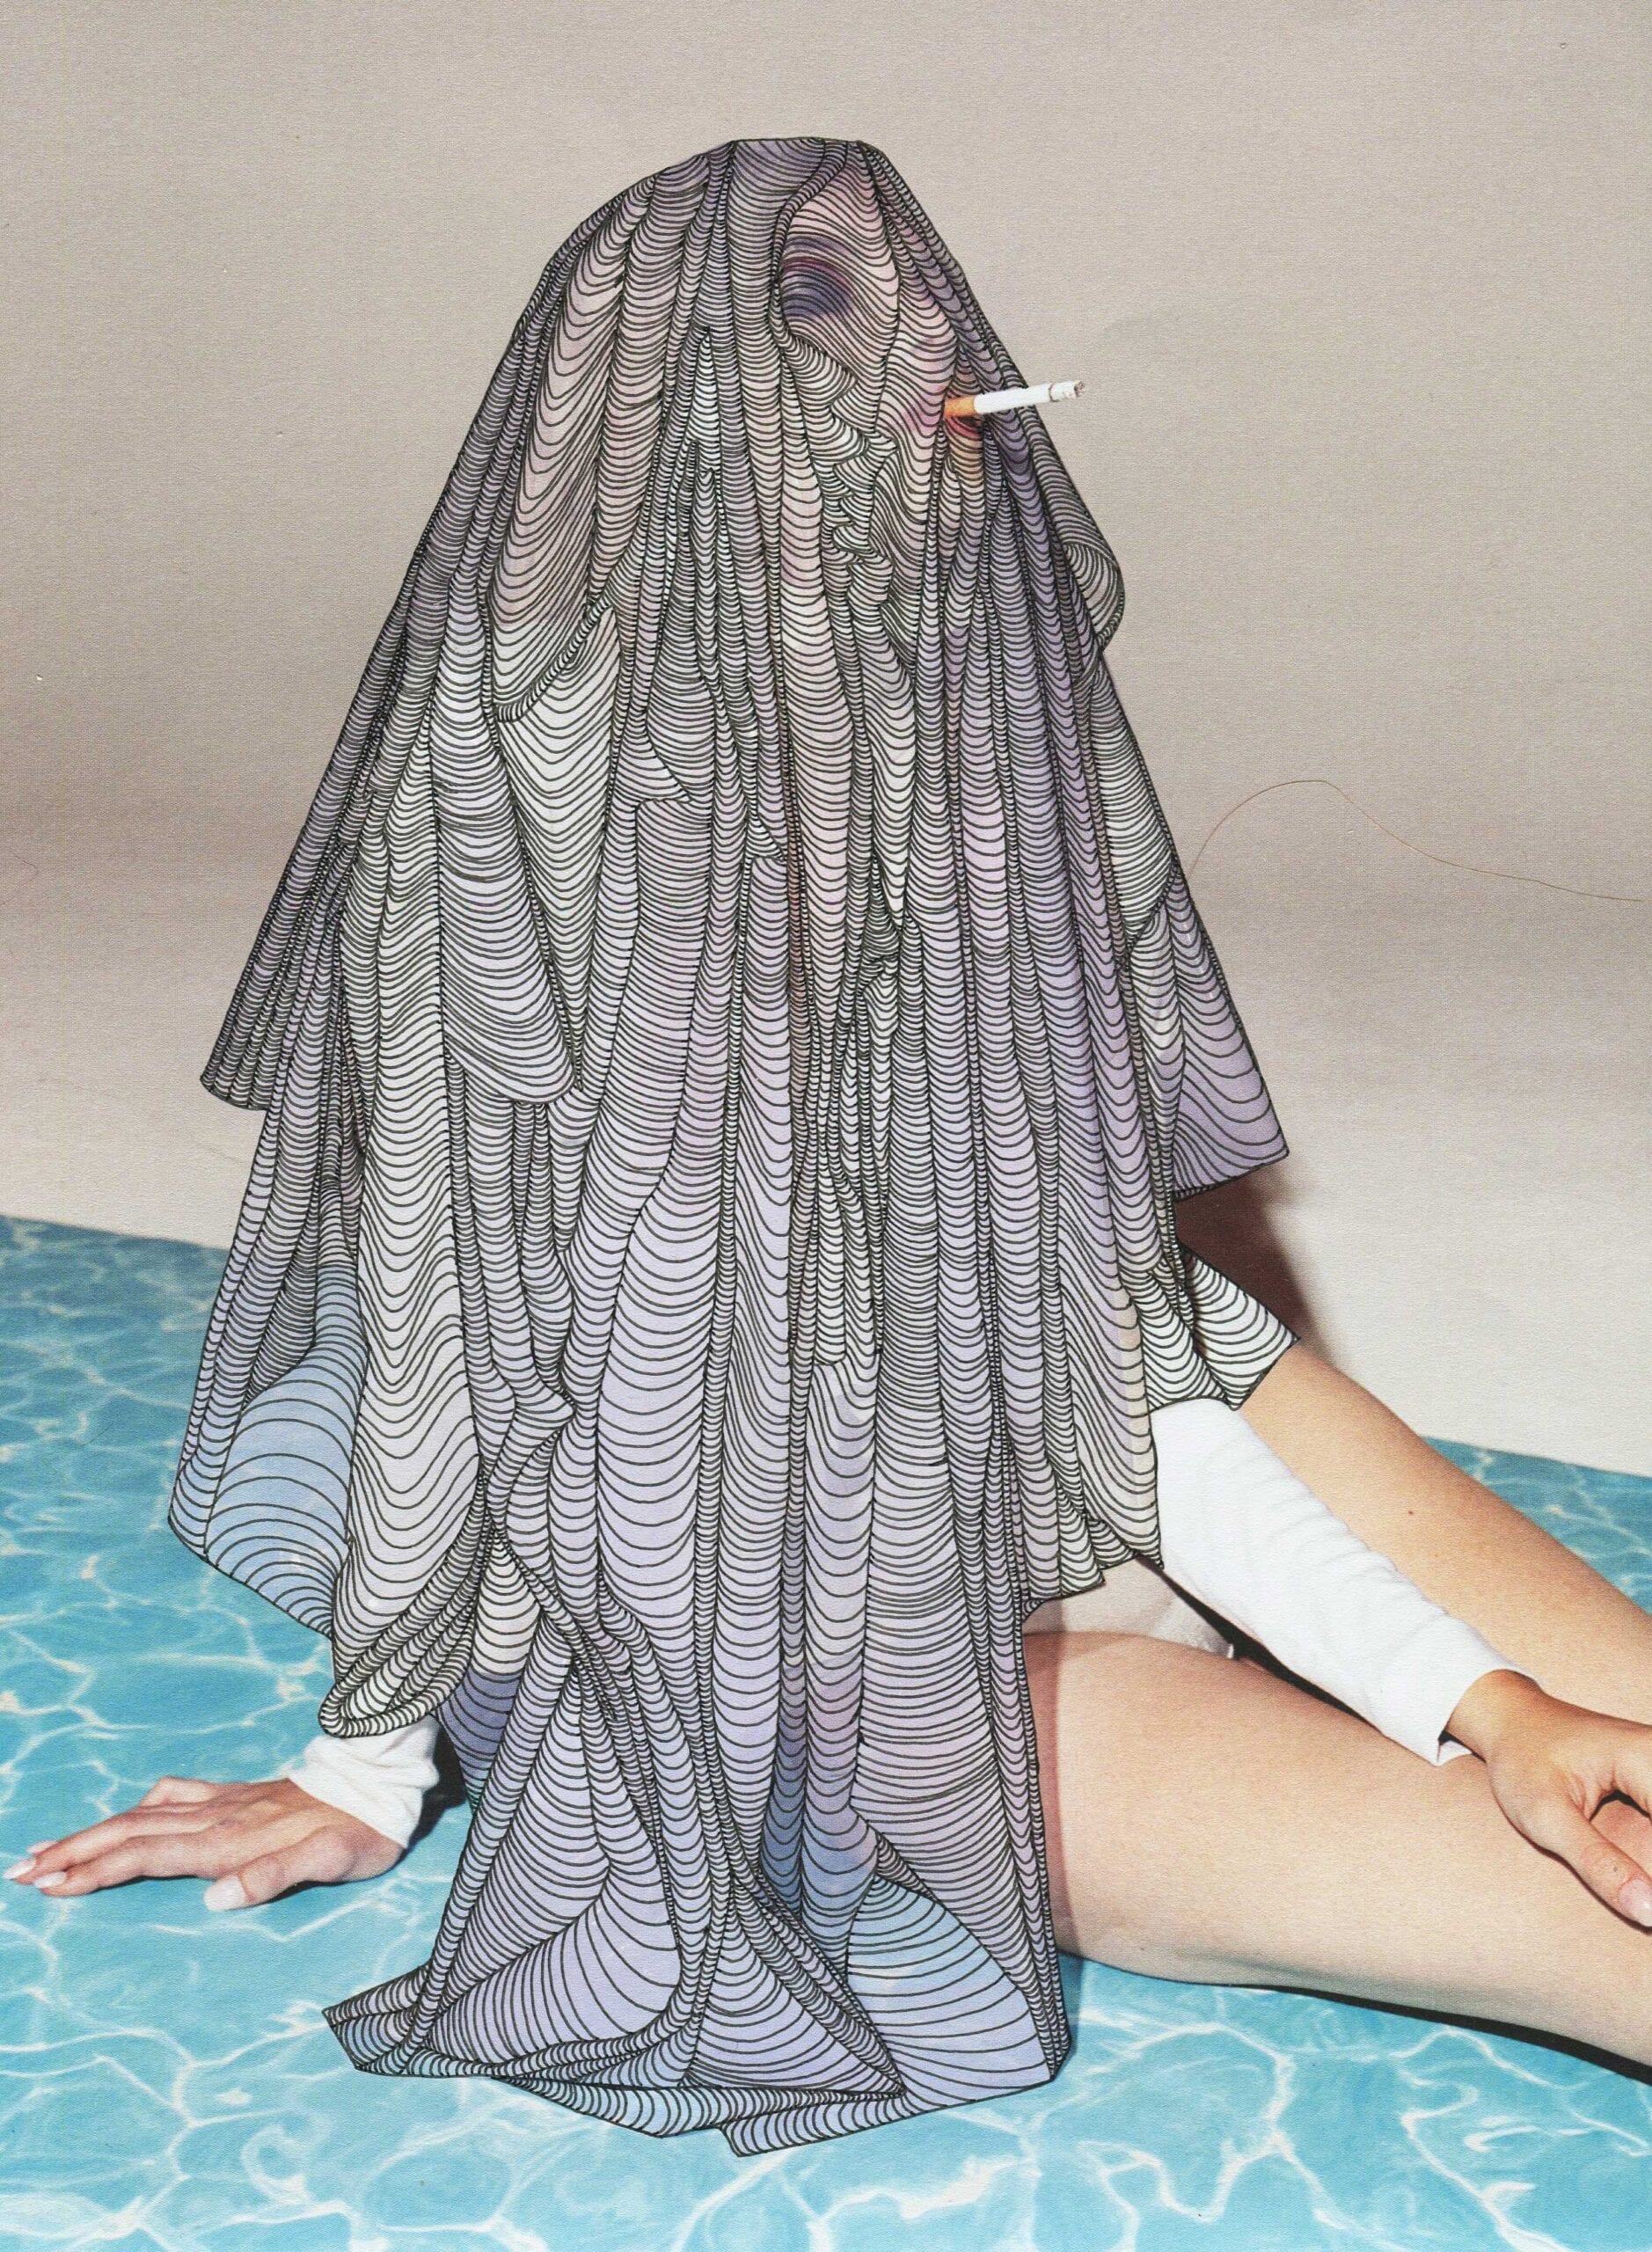 Alana Dee Haynes, Veil, mixed media, 8’’ x 11’’ , 2013.